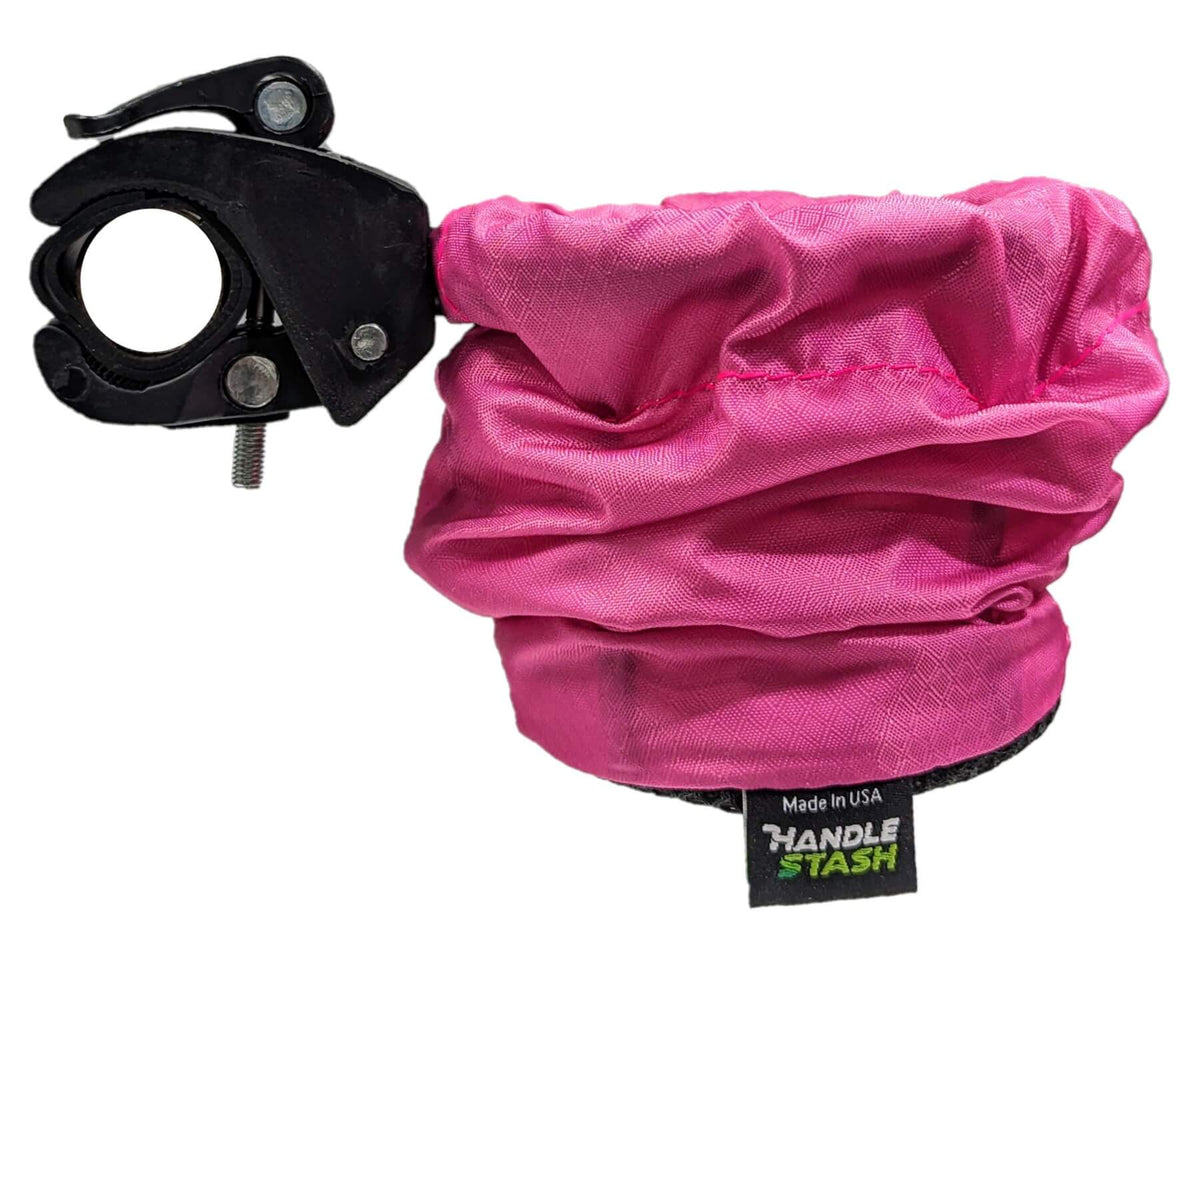 Rose colored bike cup holder by HandleStash